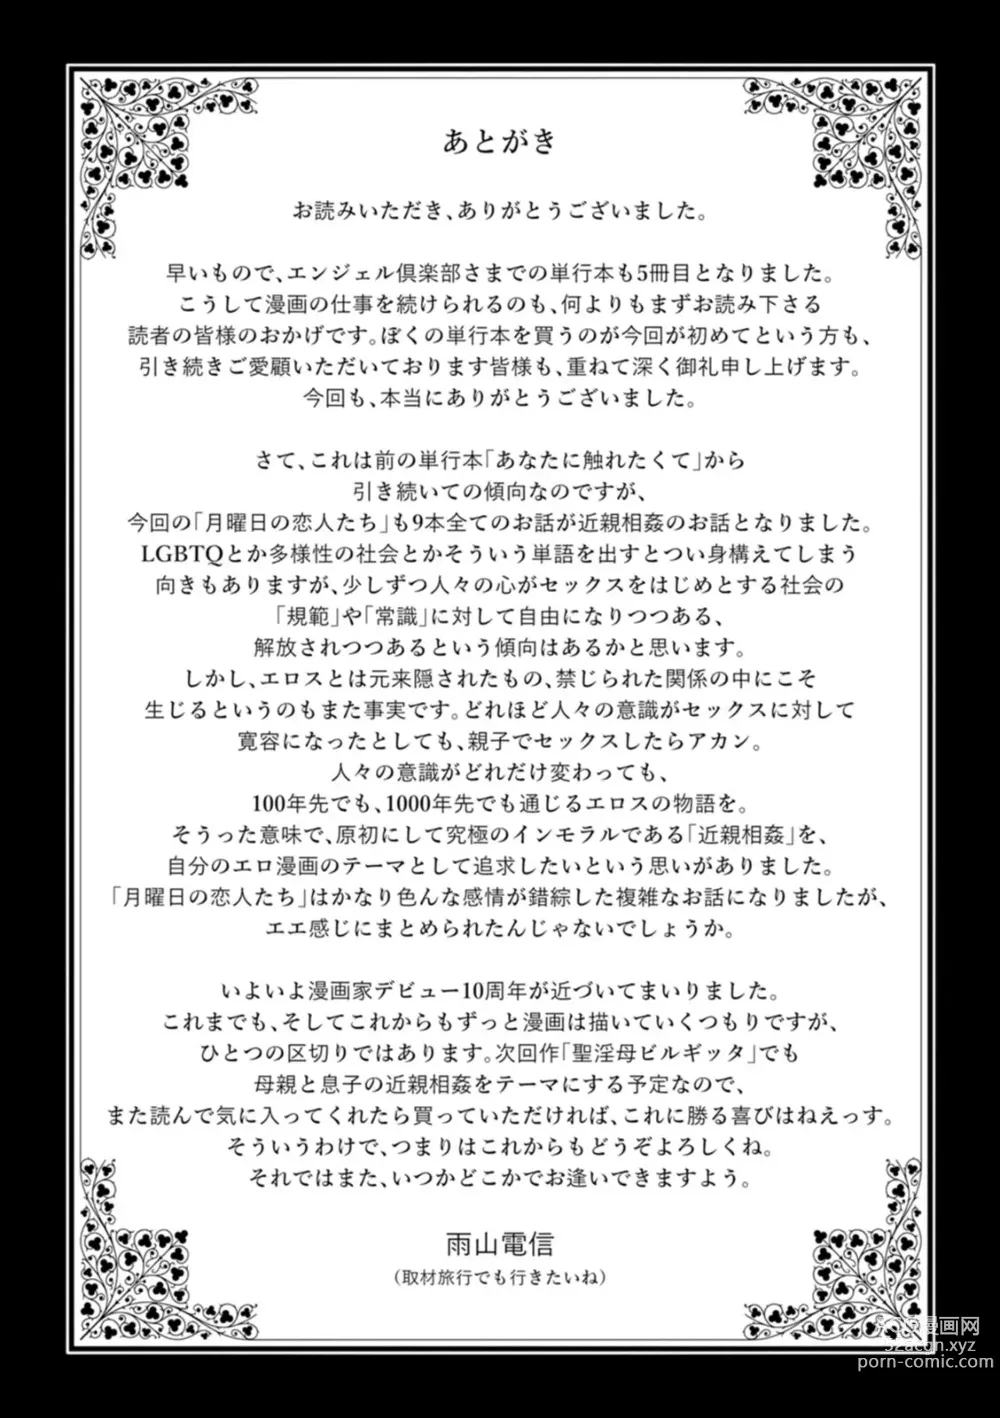 Page 197 of manga Getsuyoubi no Koibito-tachi - Lovers on monday